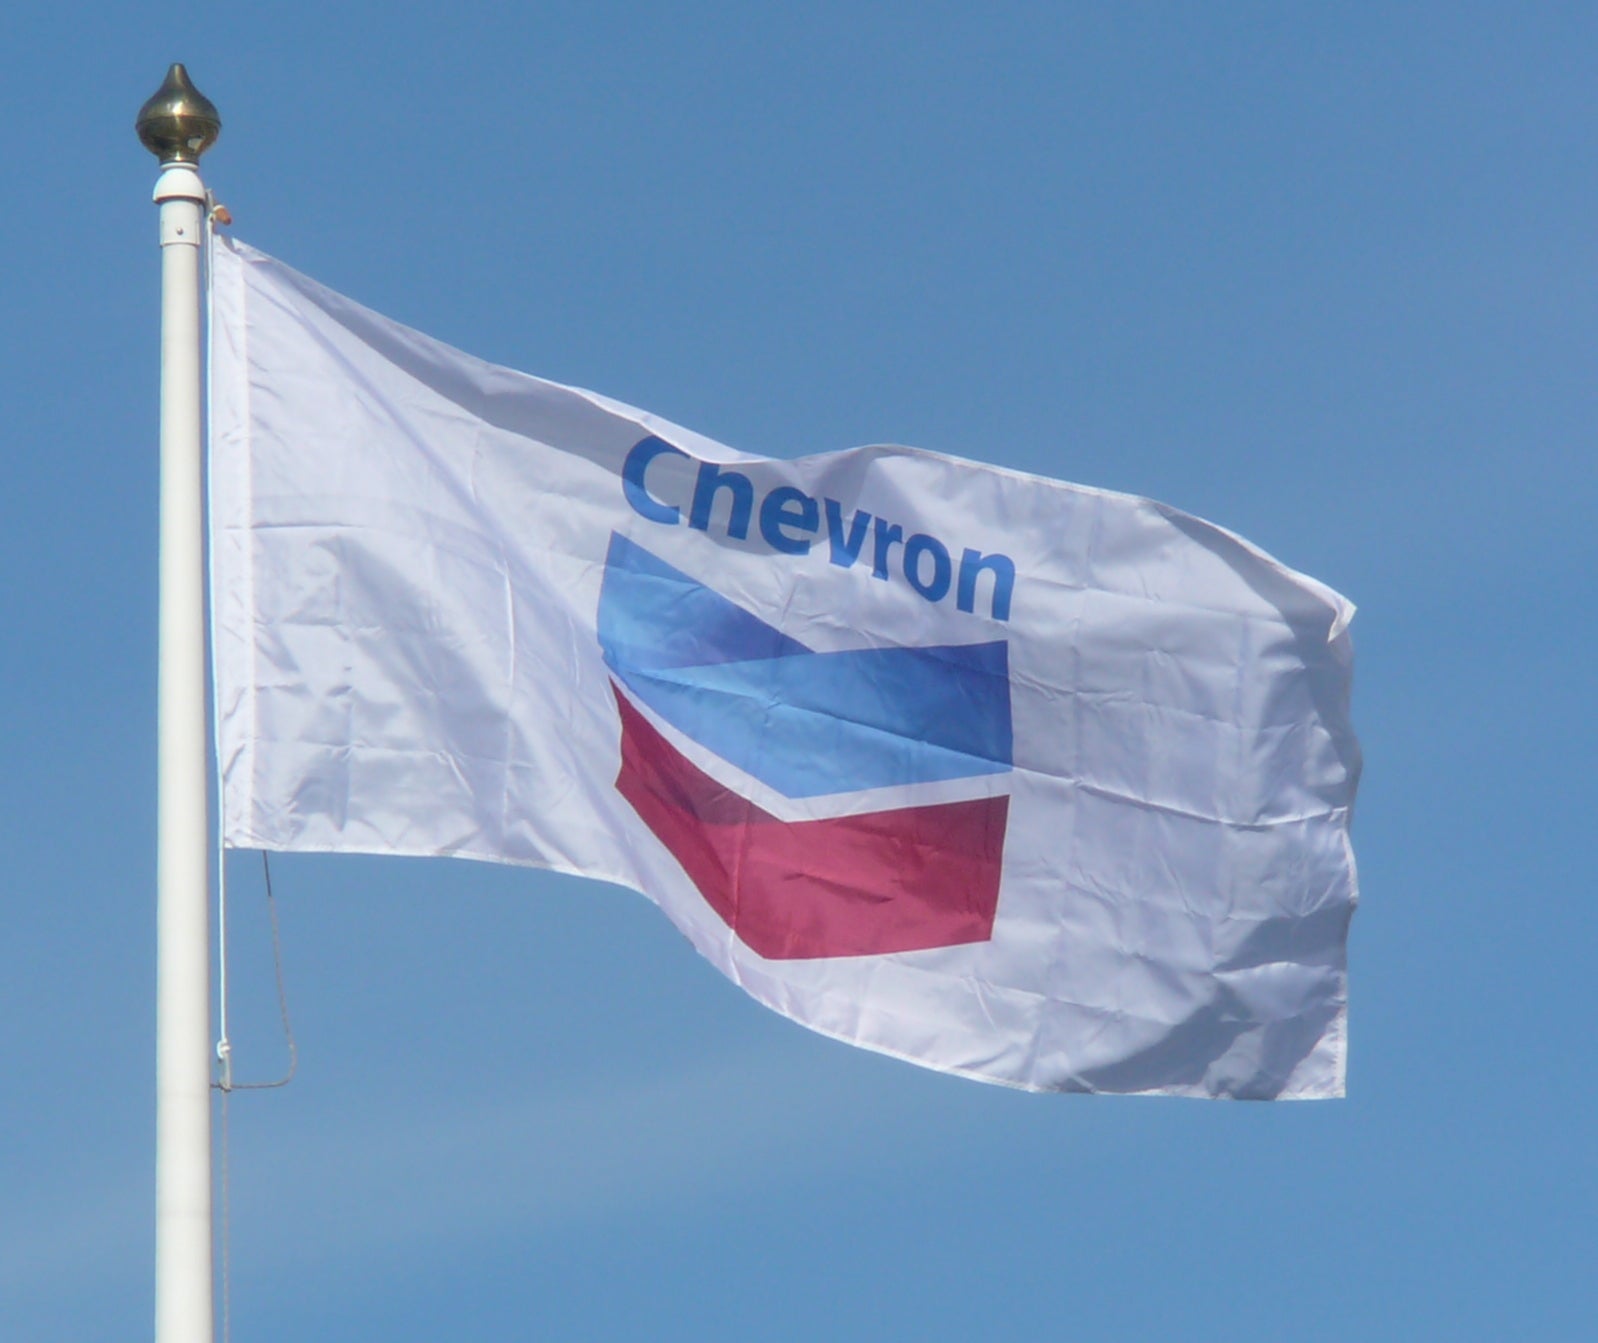 Chevron Custom made flag by Flagmart canada